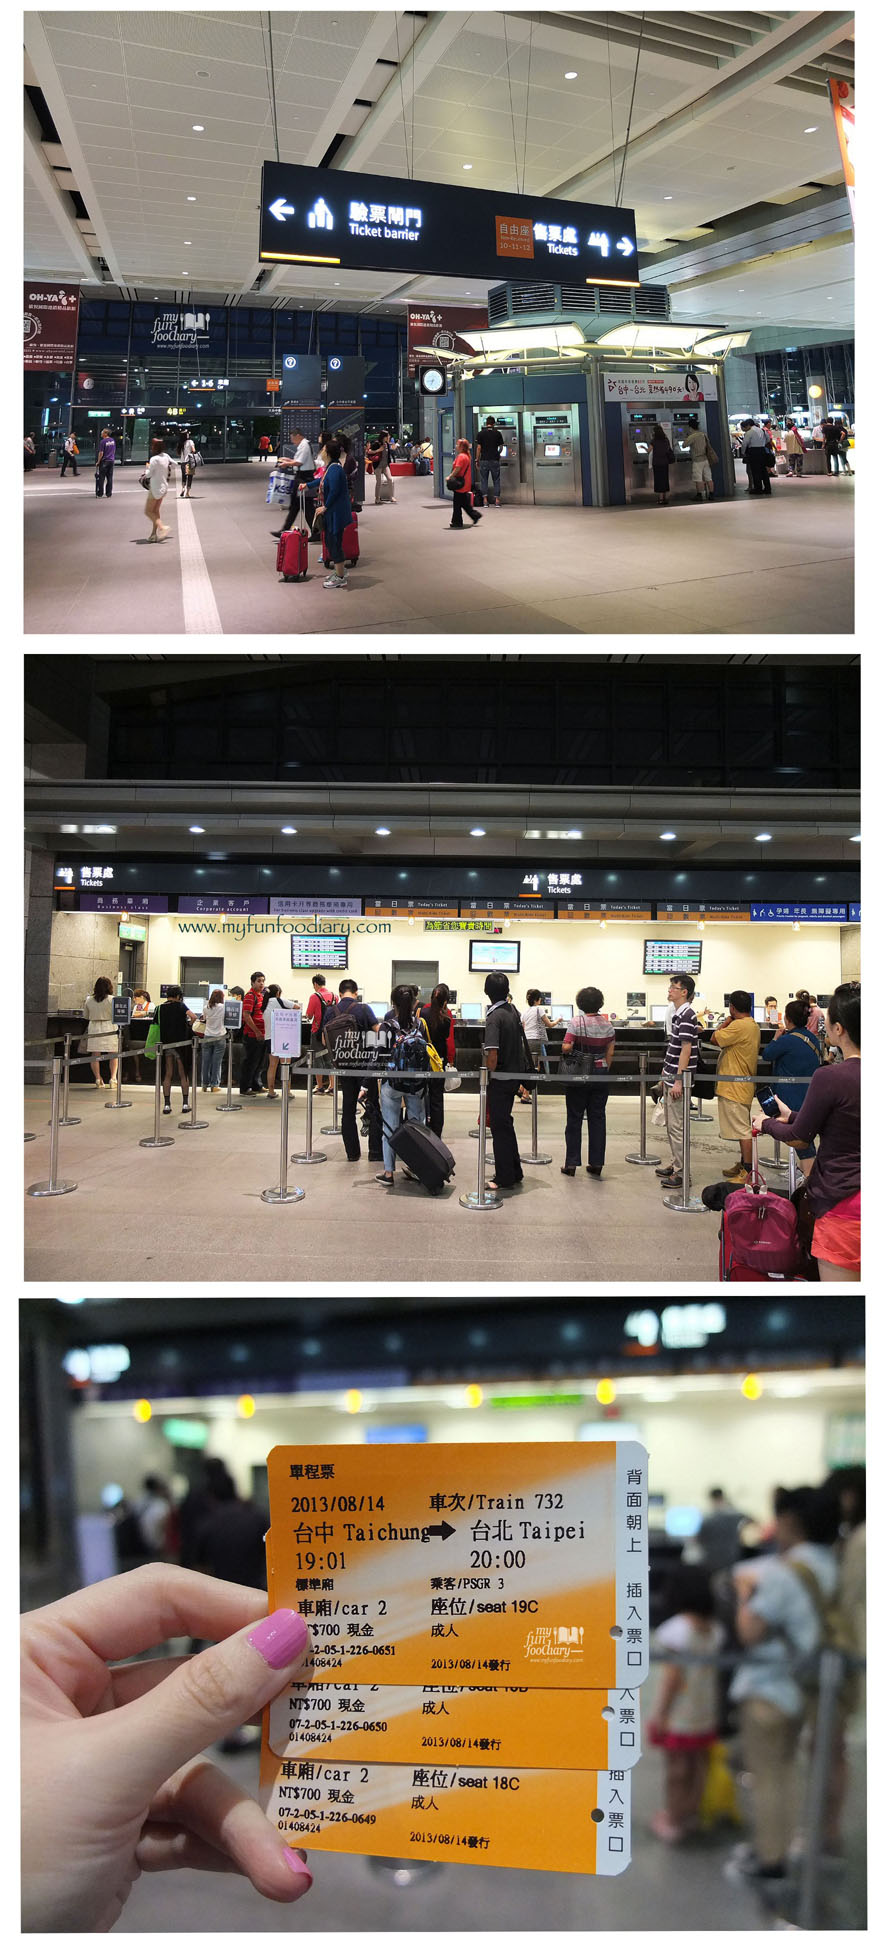 Beli Tiket HSR Taichung Taipei di Taichung Bus Station - by Myfunfoodiary